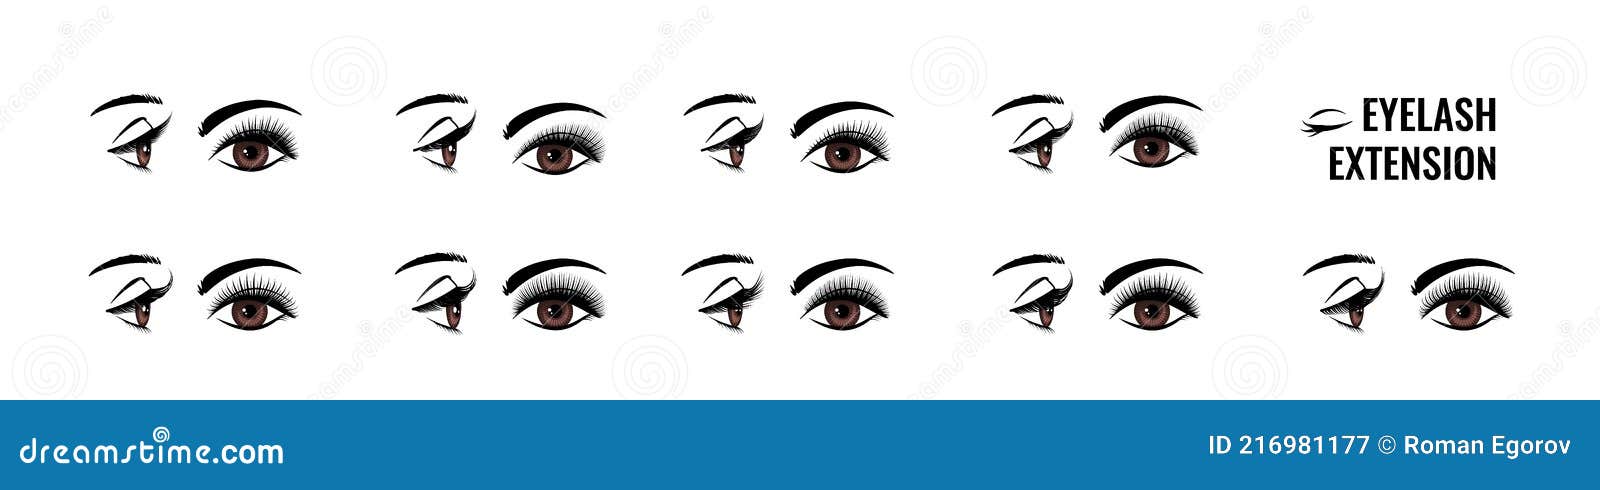 eyelash extension. false lash  for doll look. eye style infographic. makeup tutorial. lengthening mascara effect